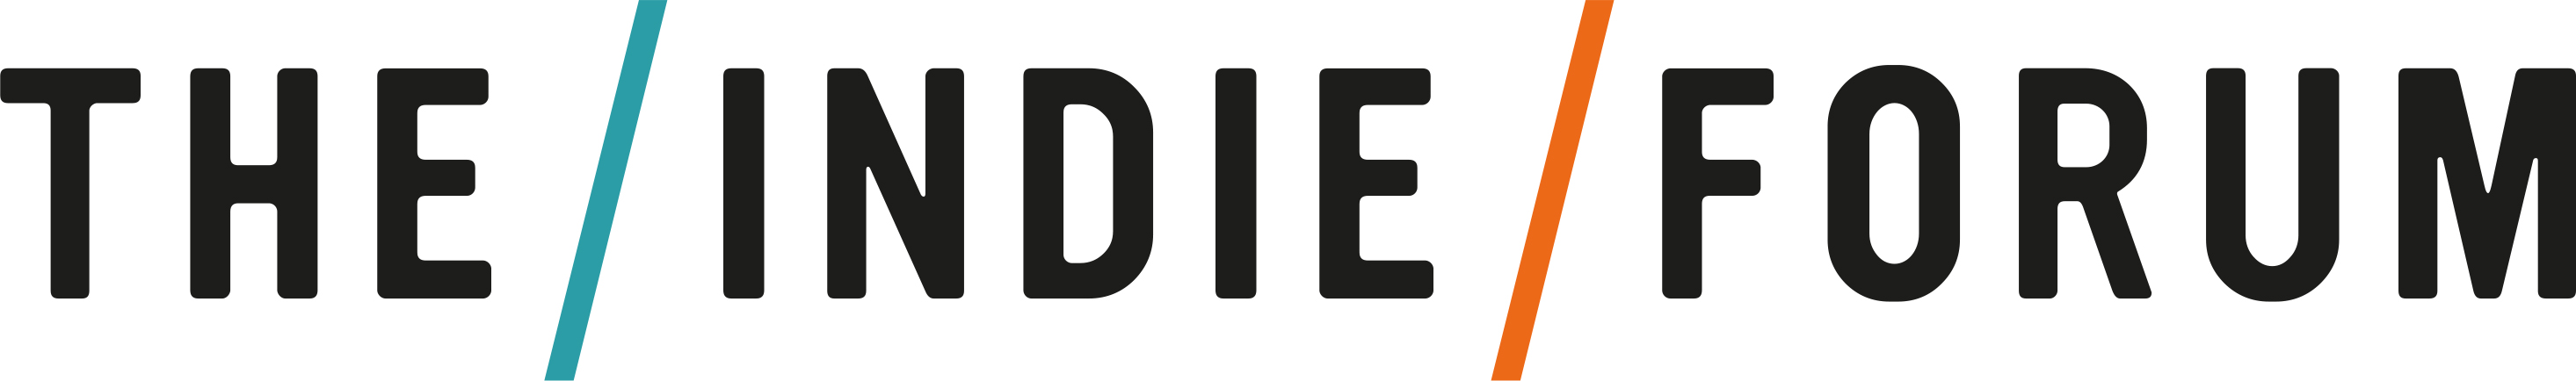 The Indie Forum logo